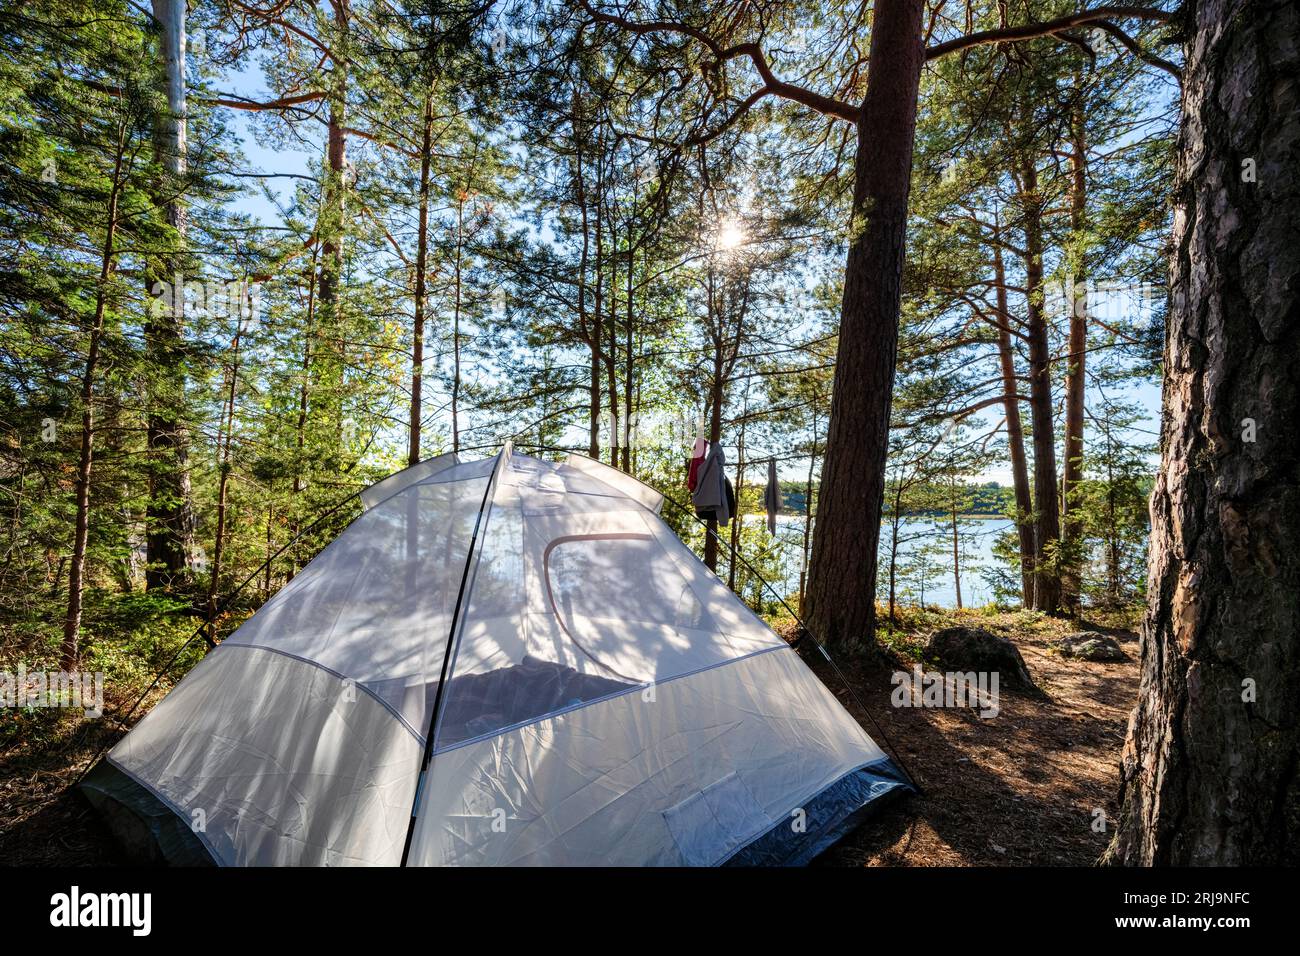 Camping at Linlo island, Kirkkonummi, Finland Stock Photo